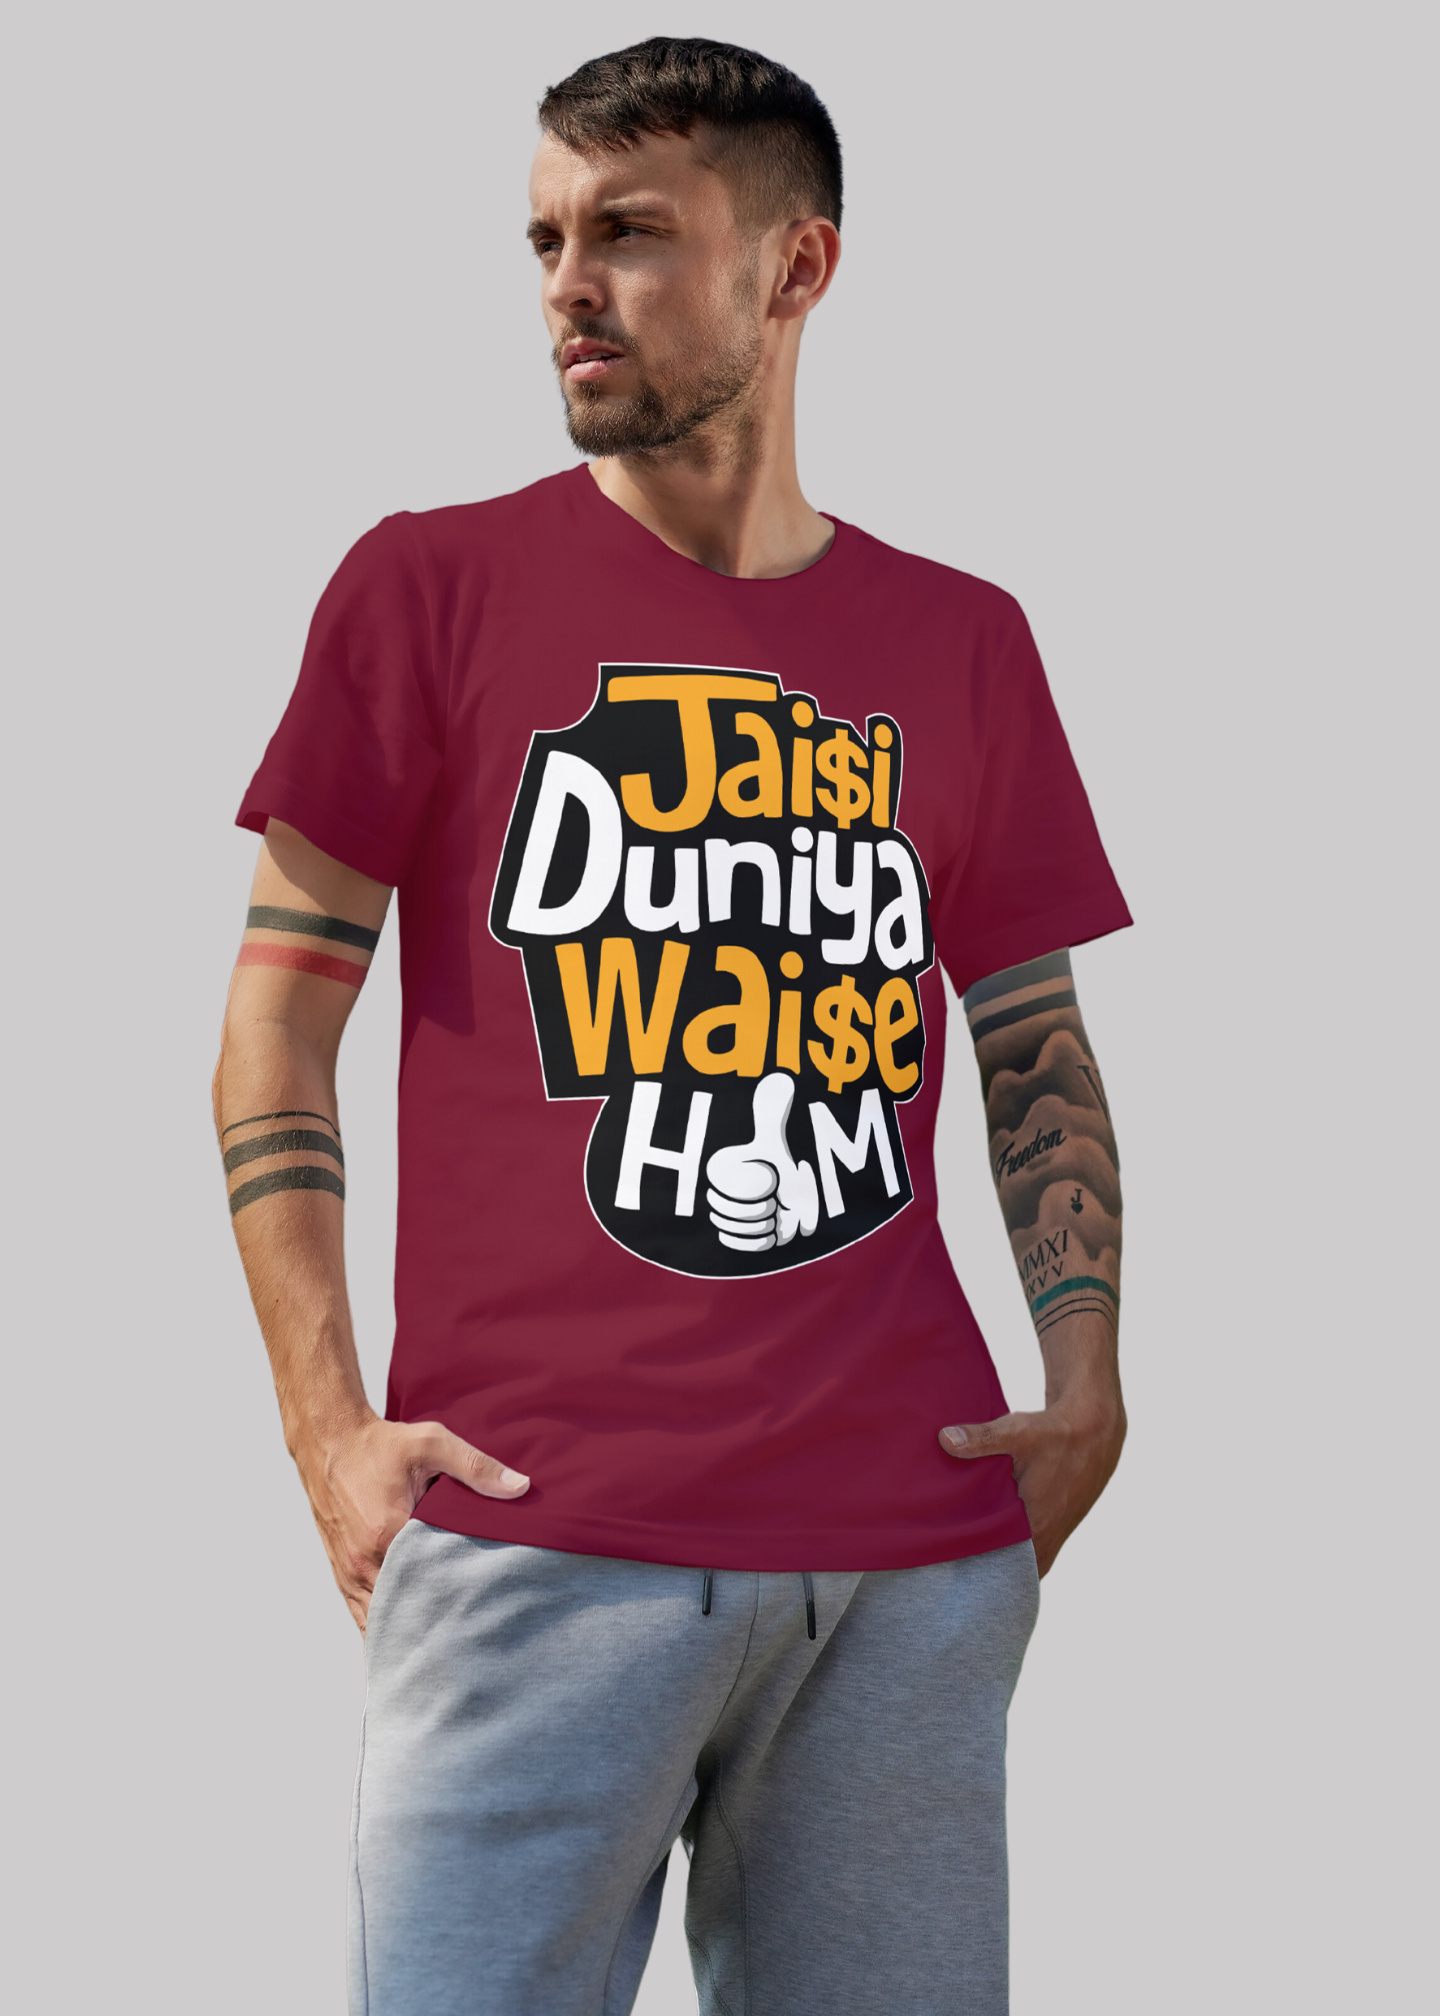 Jaisi duniya waise hum Printed Half Sleeve Premium Cotton T-shirt For Men